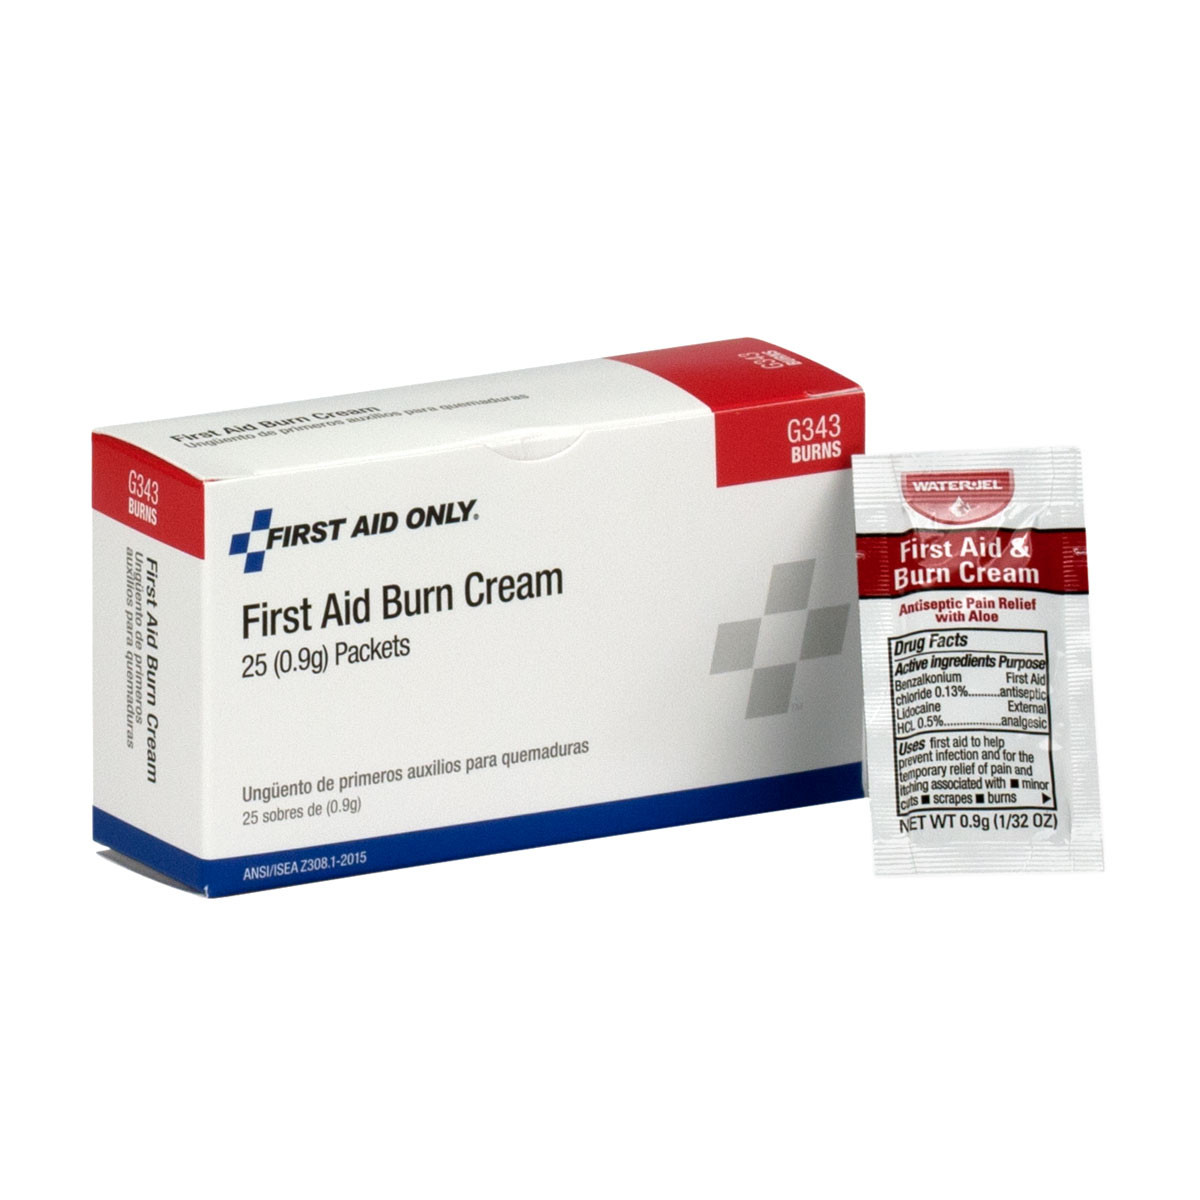 First Aid Burn Cream (0.9g) Packet Each Packets - First Aid Safety